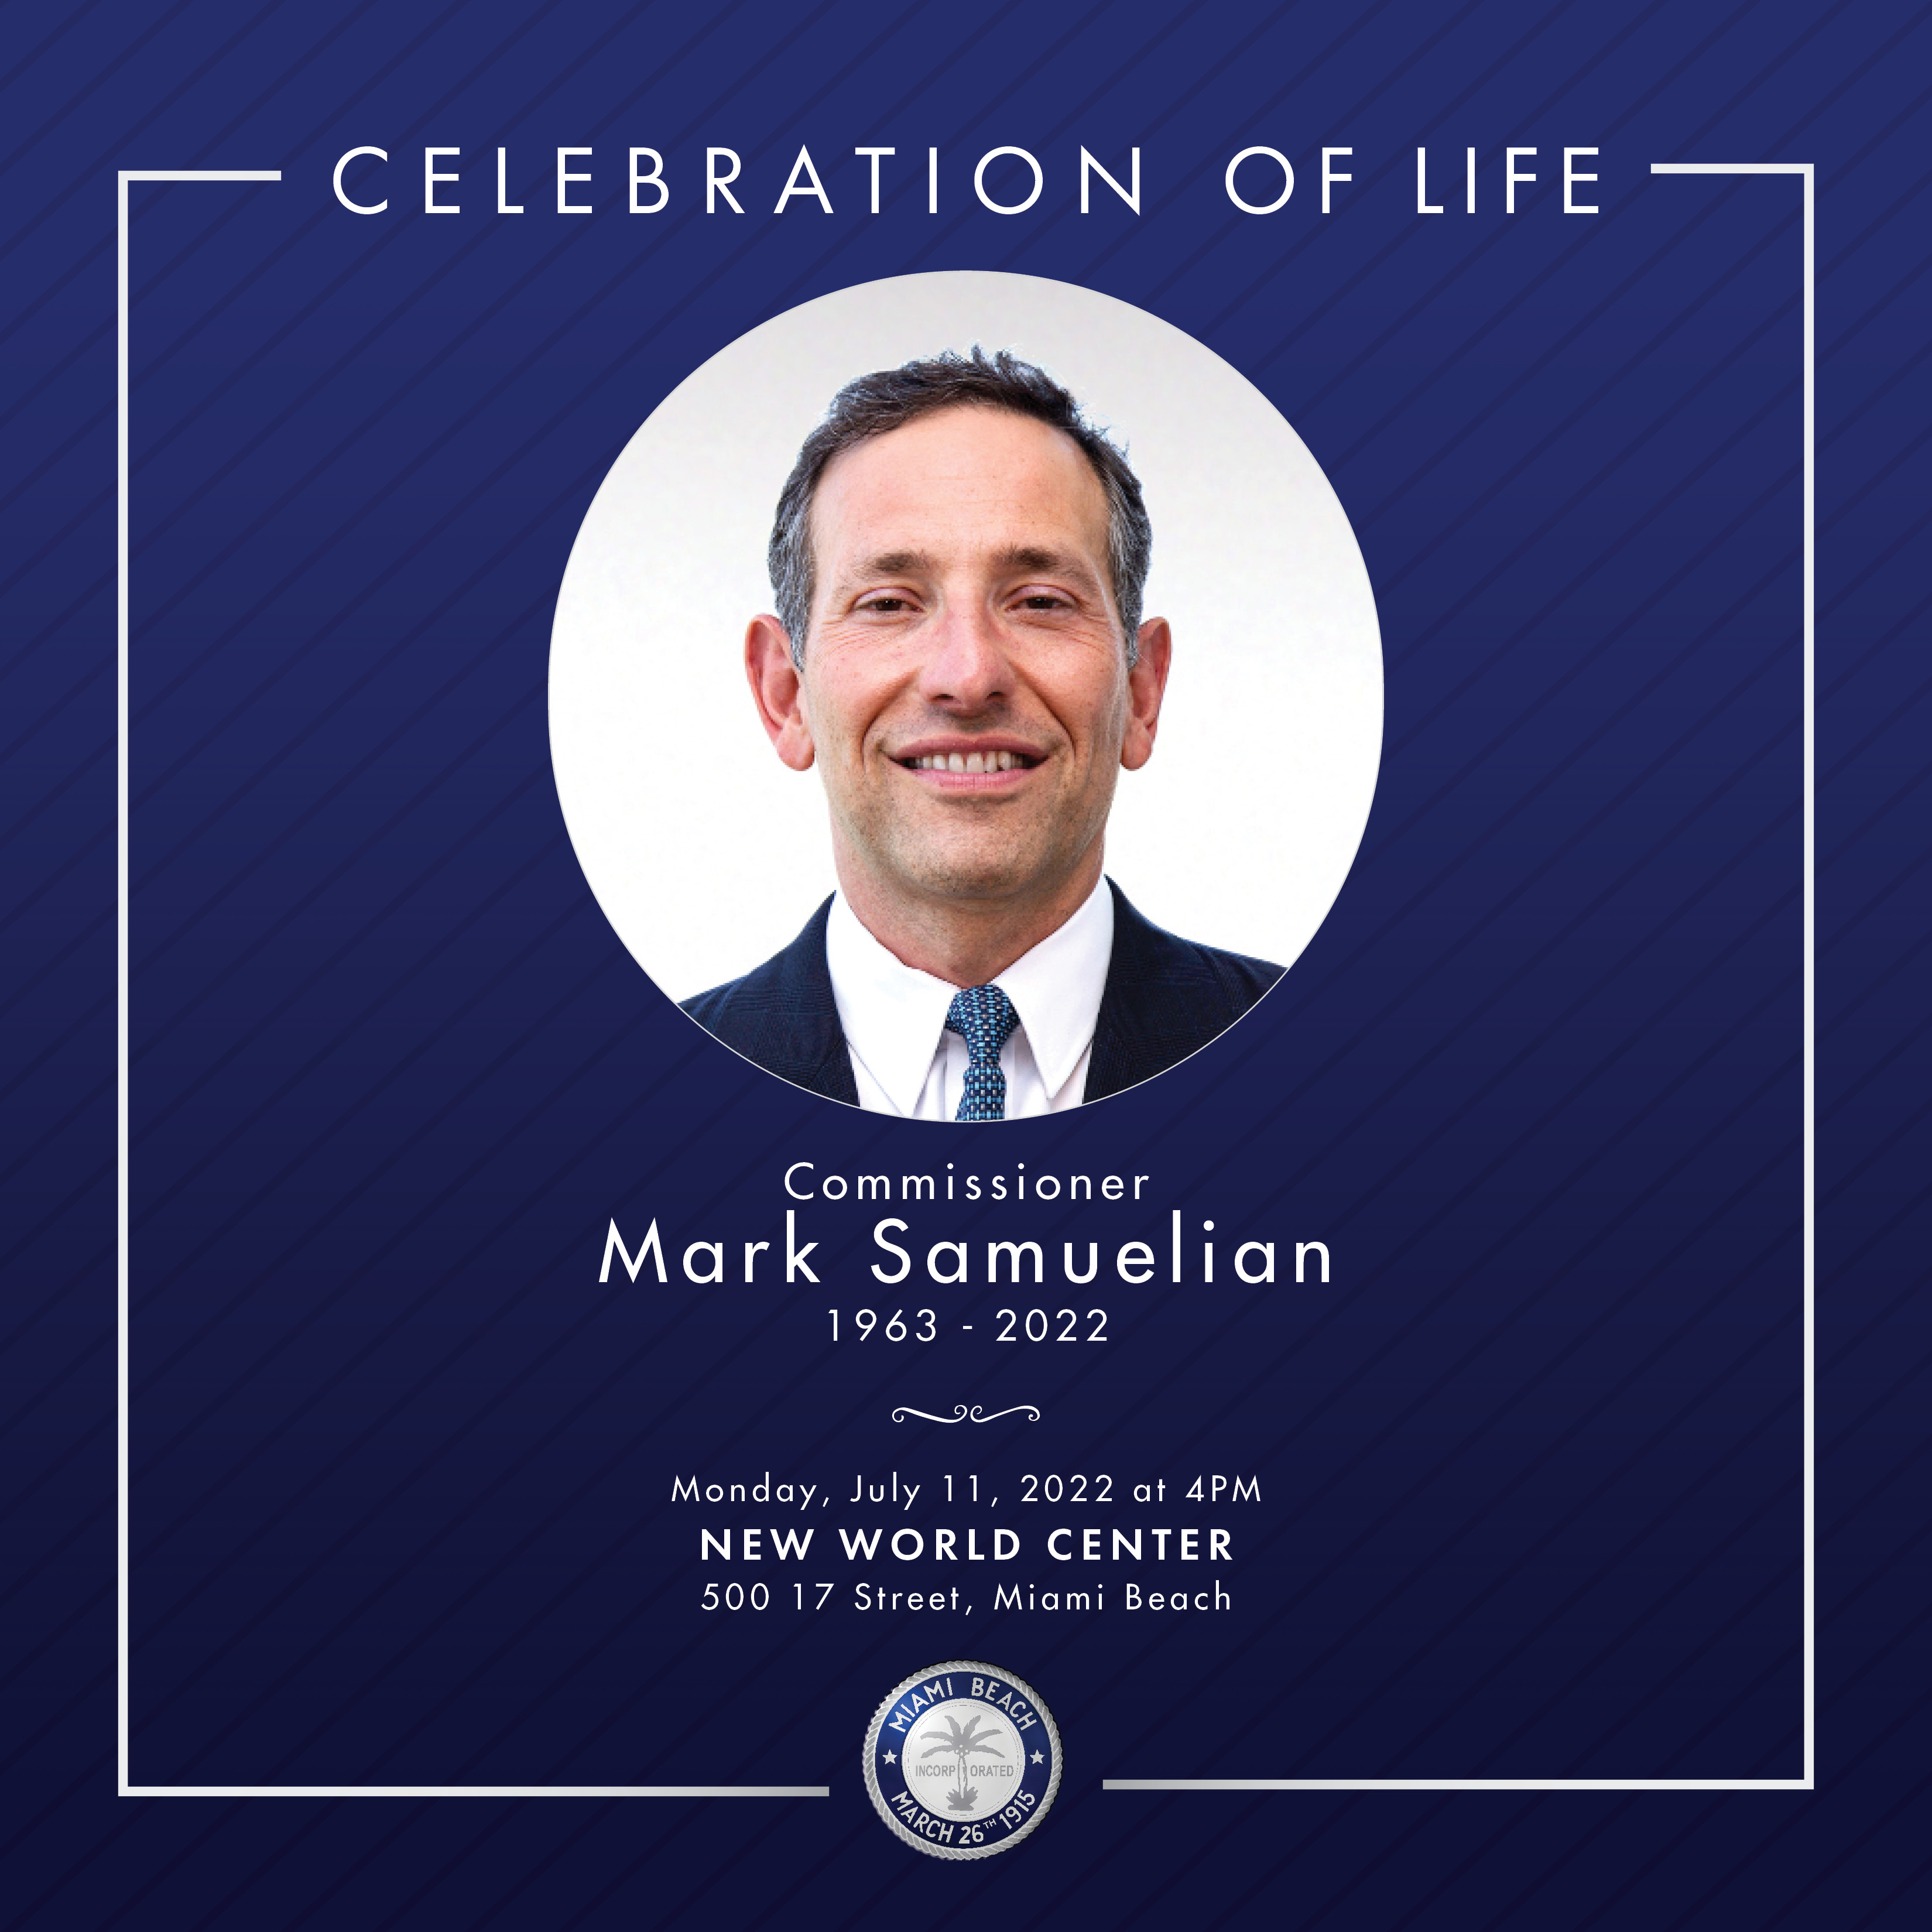 Celebration of Life for Commissioner Mark Samuelian